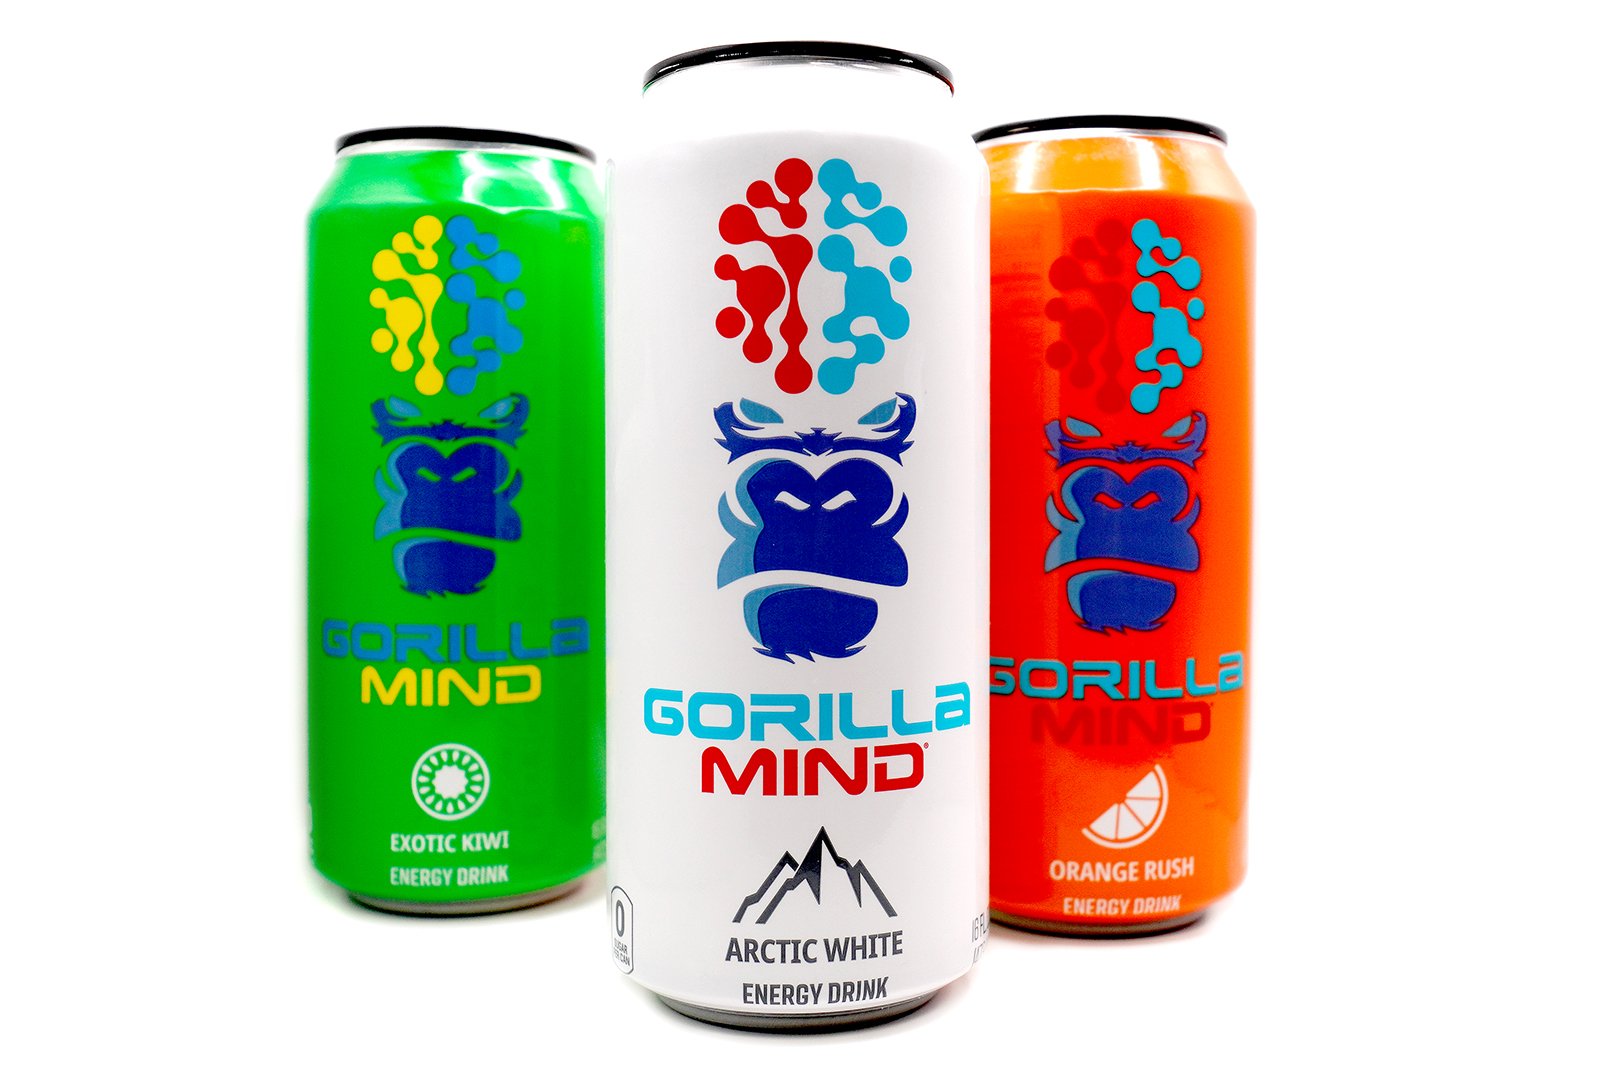 Gorilla Mind Energy Review